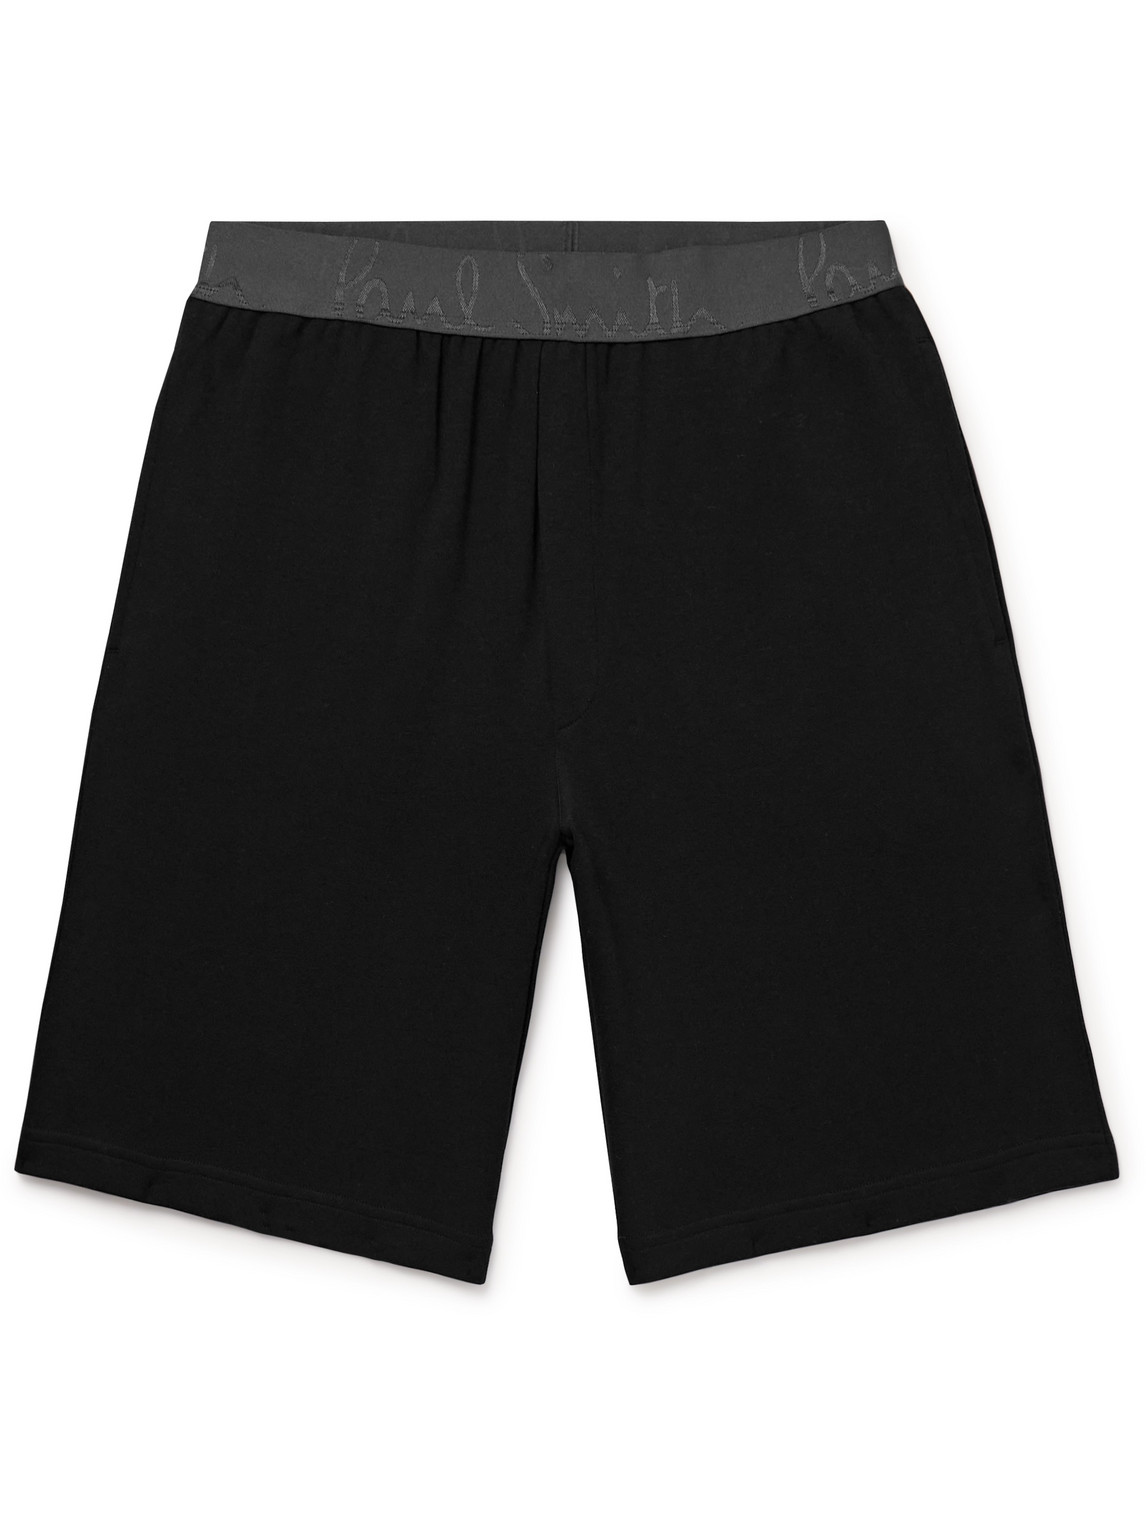 Paul Smith - Slim-Fit Cotton and Modal-Blend Jersey Shorts - Men - Black - M von Paul Smith